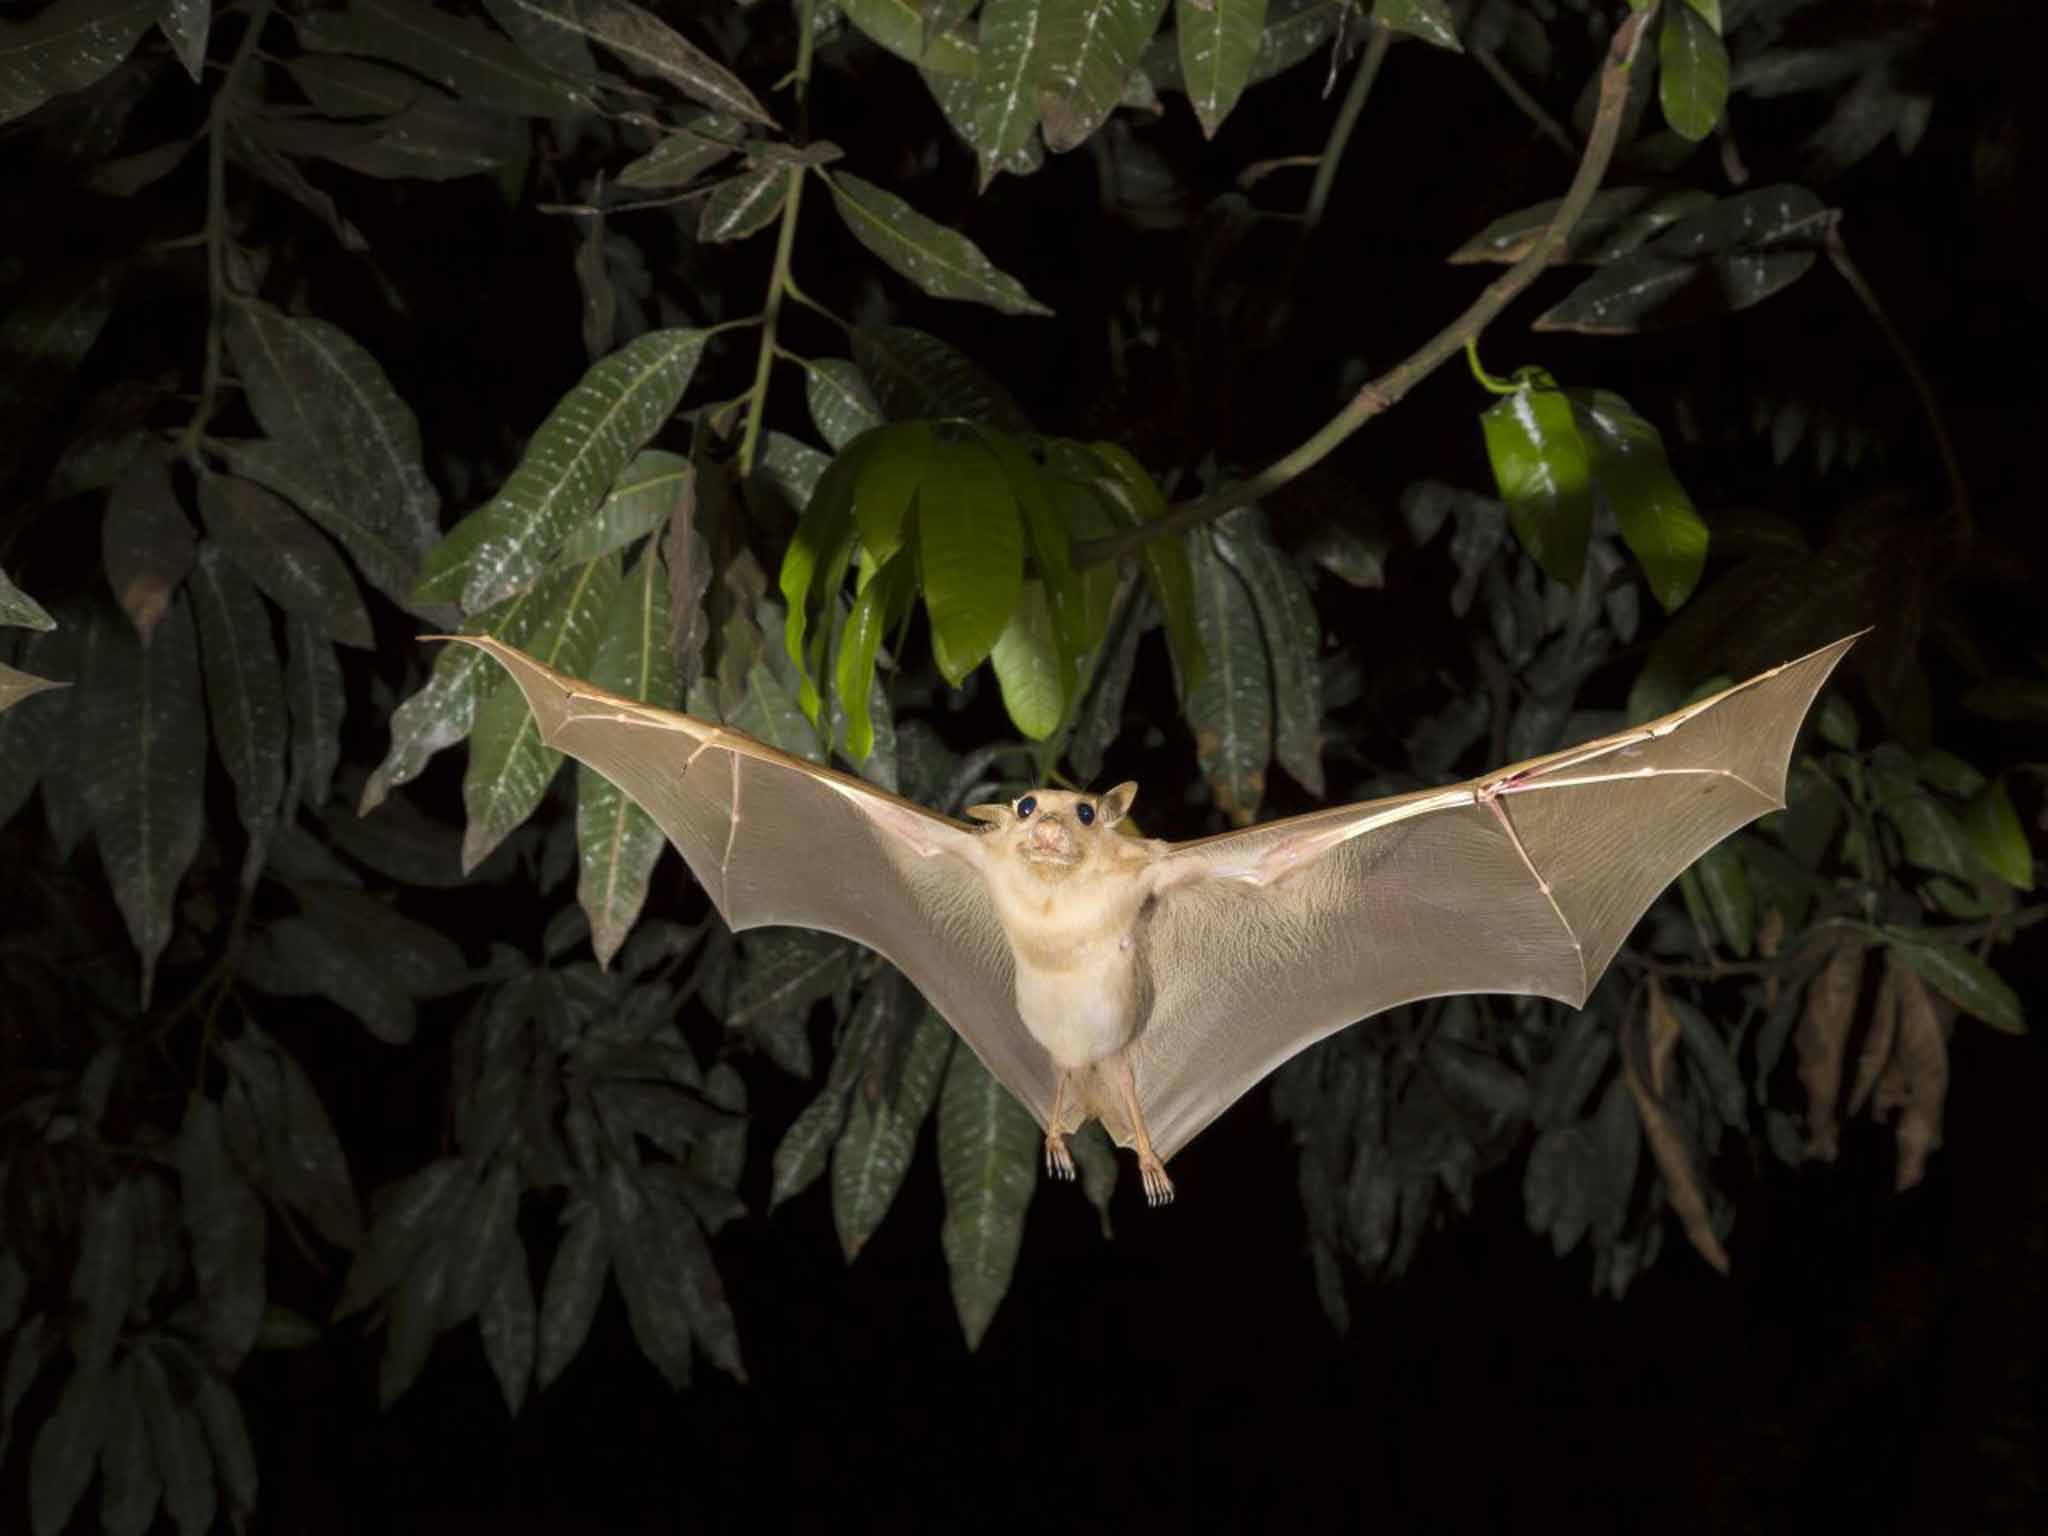 Bat in flight (Rex images)